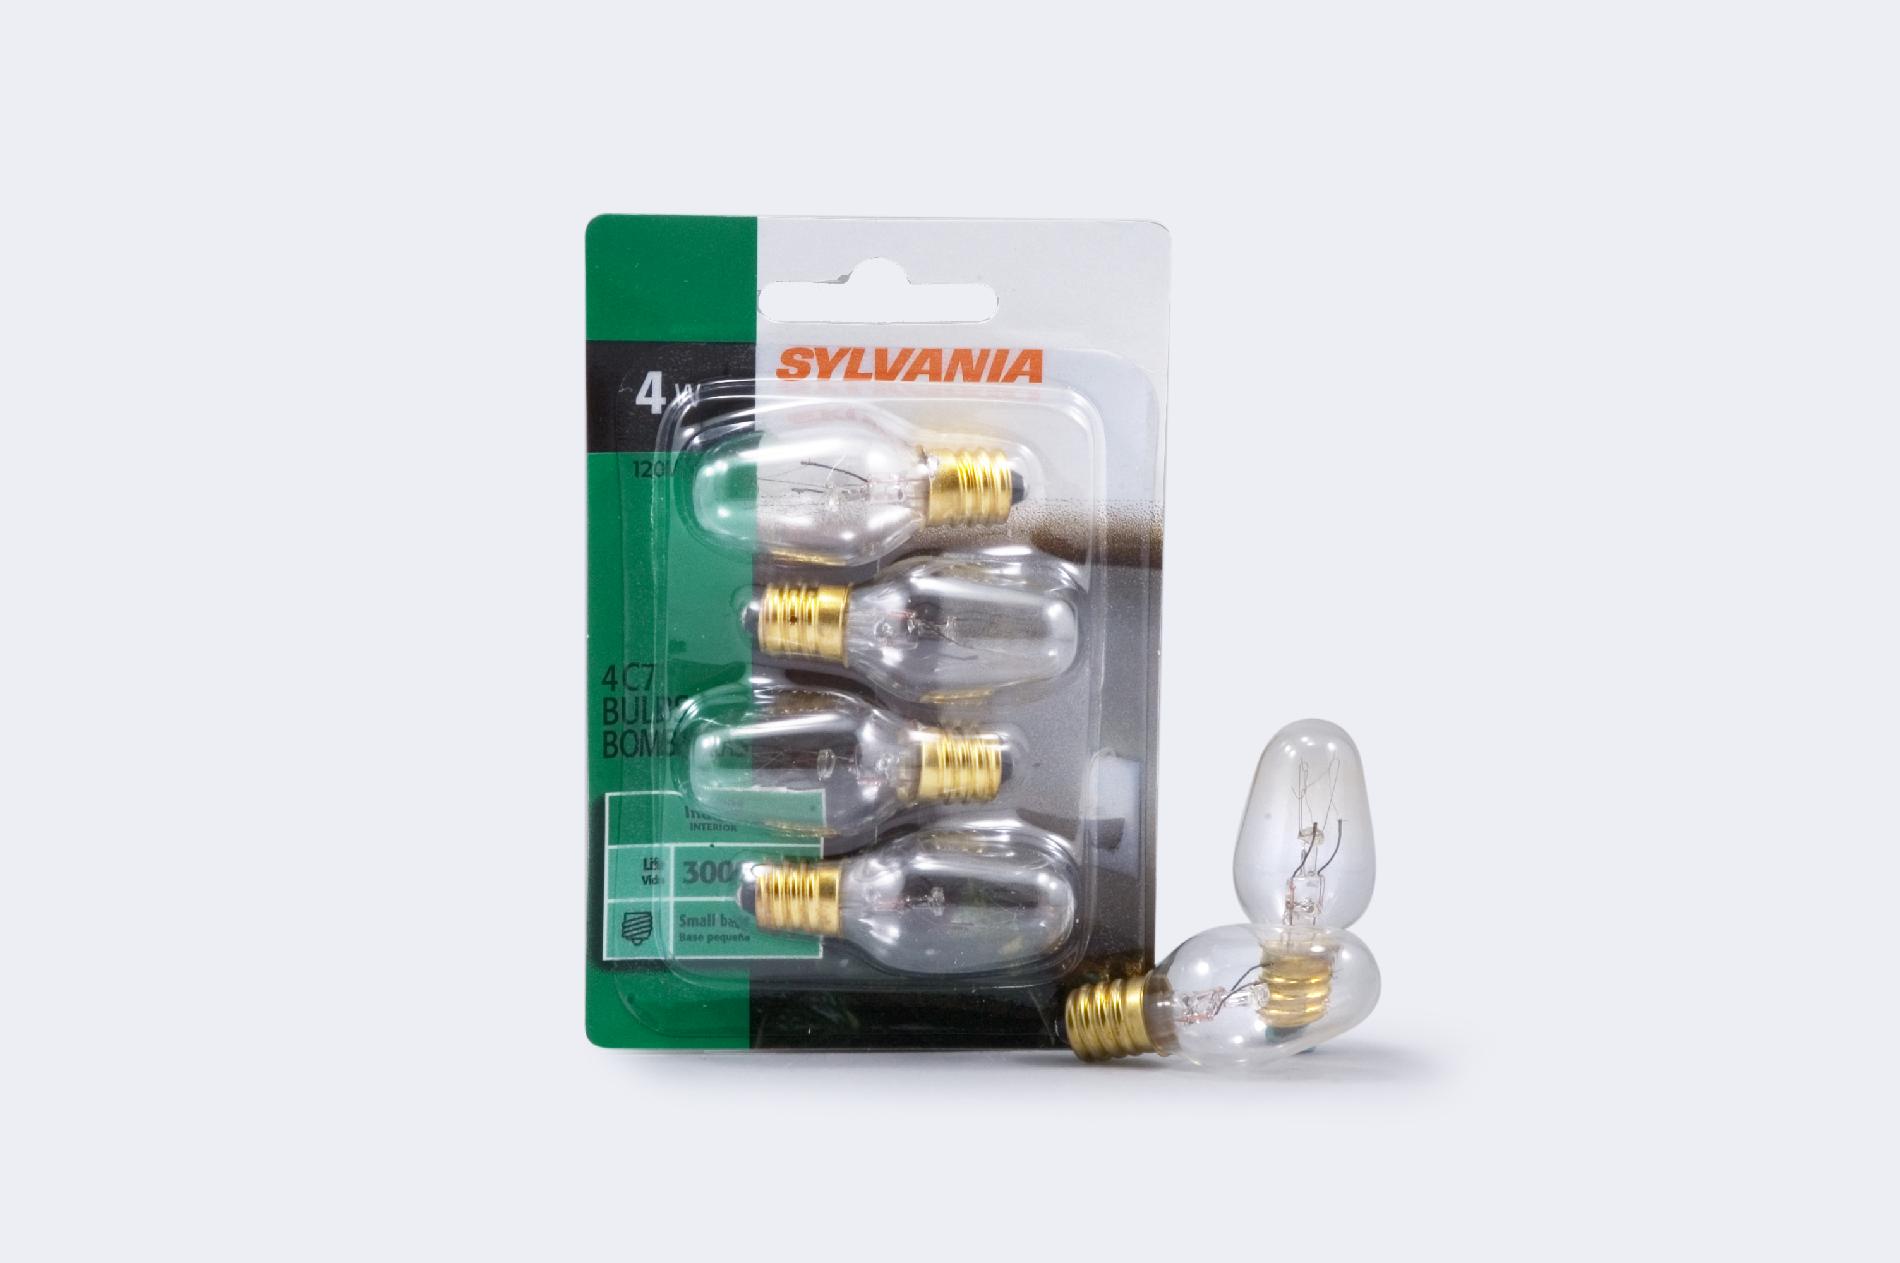 Sylvania Incandescent Soft White Night Lamp C7-Candelabra Base 120V Light Bulb 4W - 4 Pack